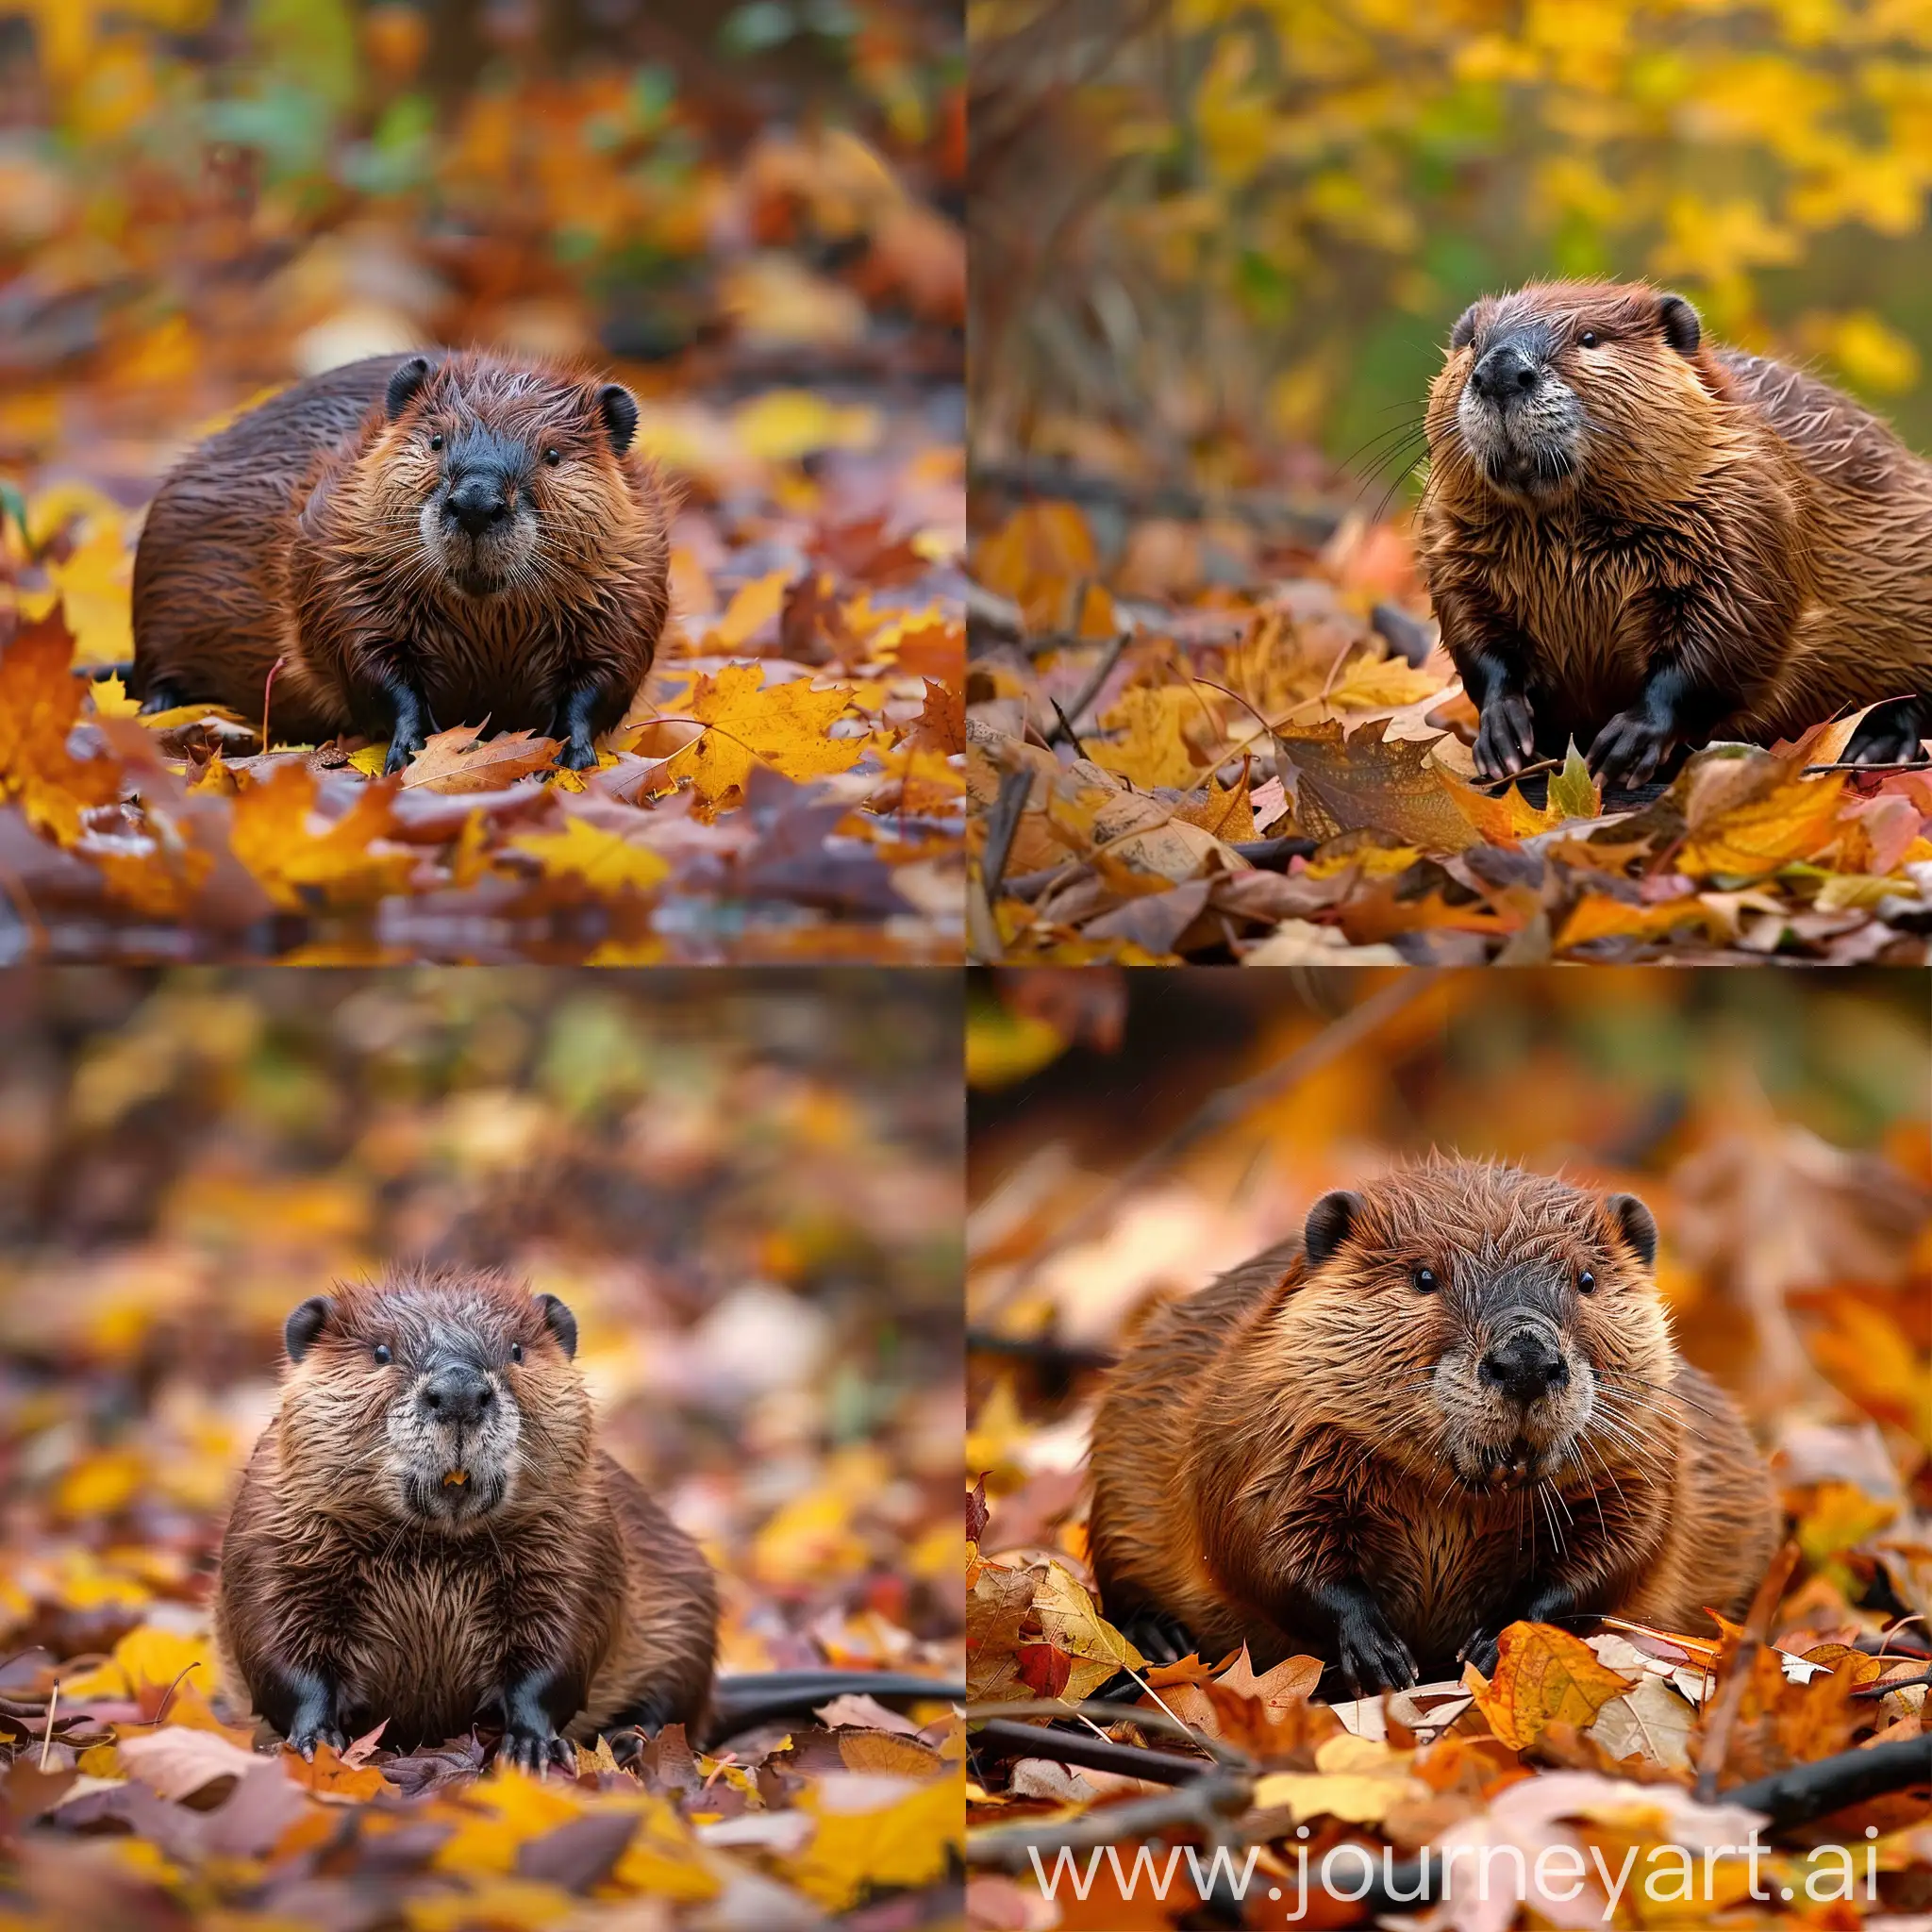 Beaver-Enjoying-Autumn-Leaves-in-Vibrant-Colors